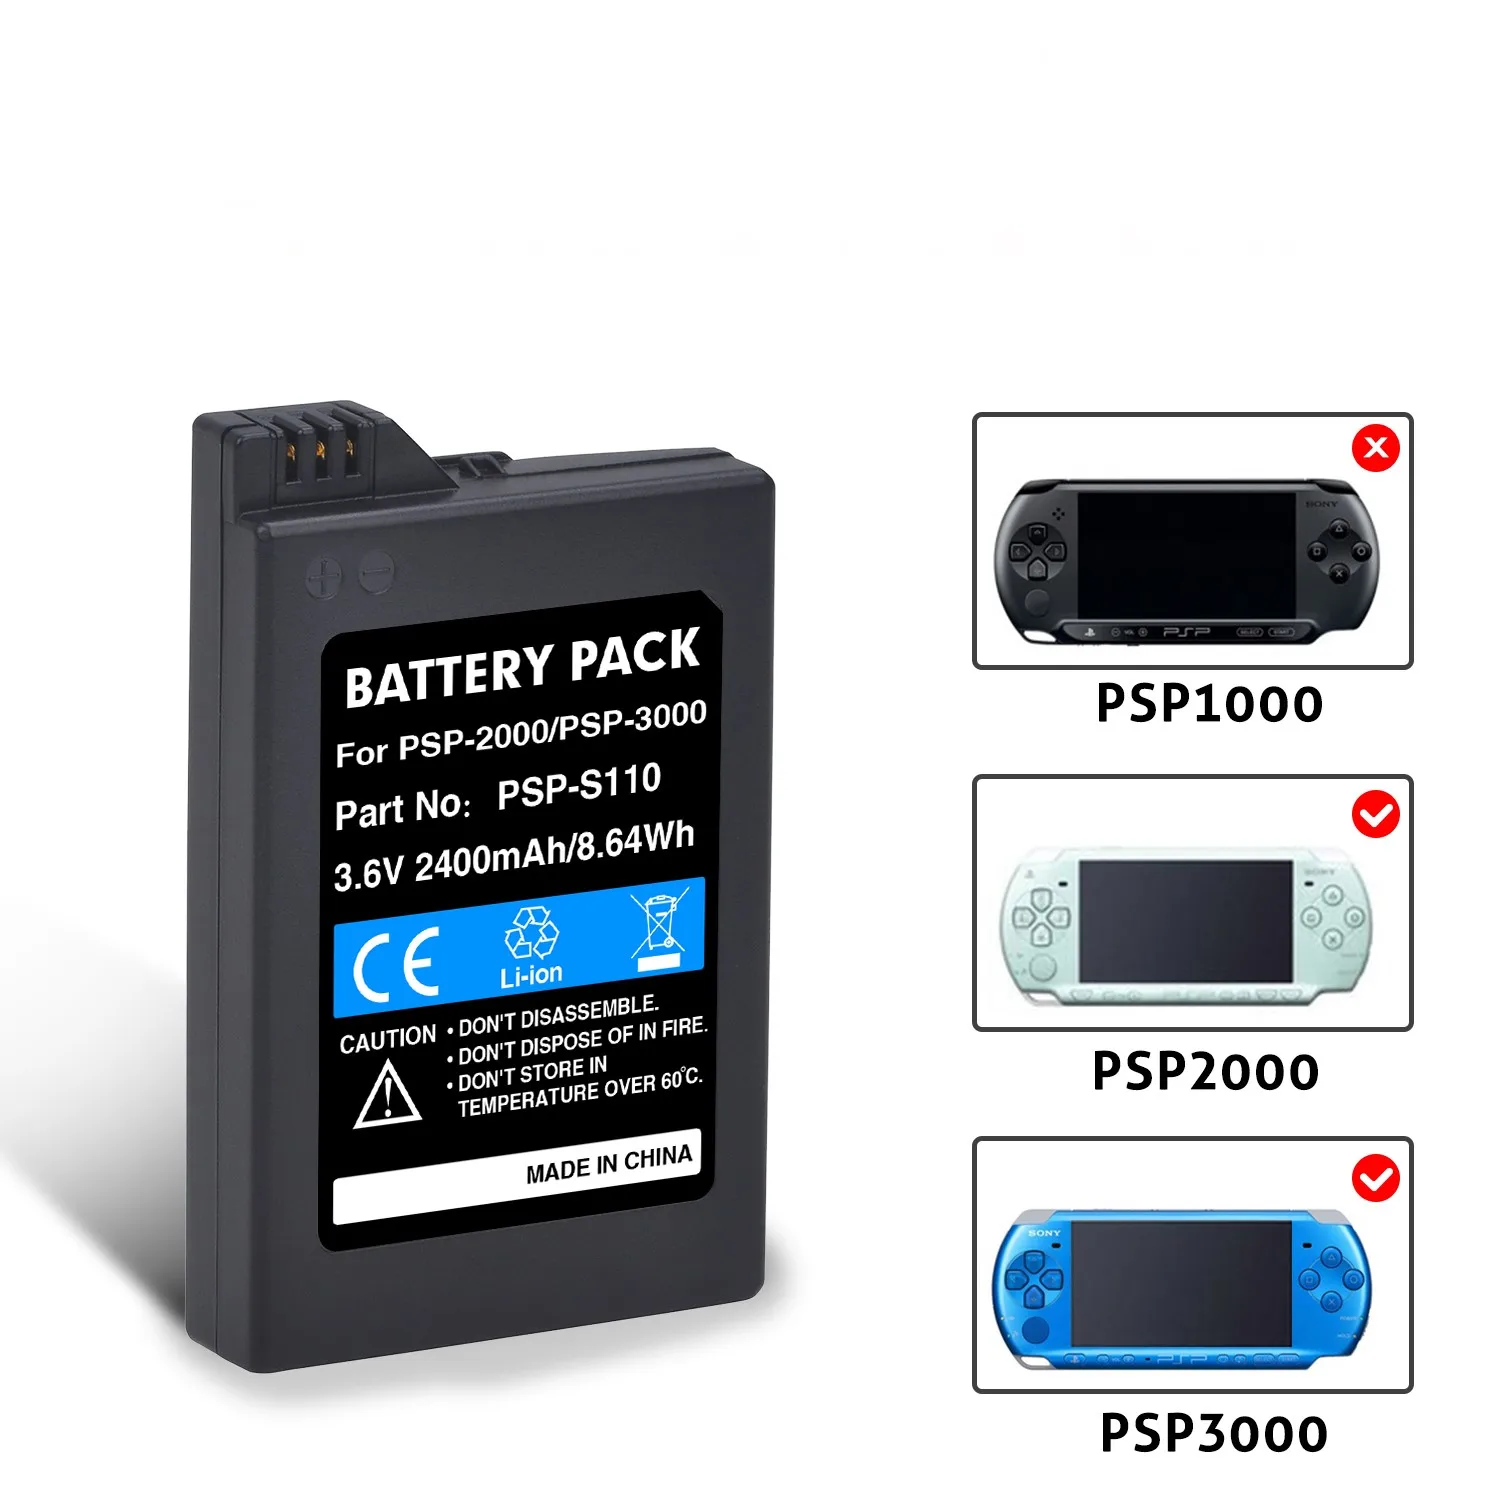 2400mAh PSP2000 PSP-3000 Batterie und Ladegerät für Sony PSP-2000